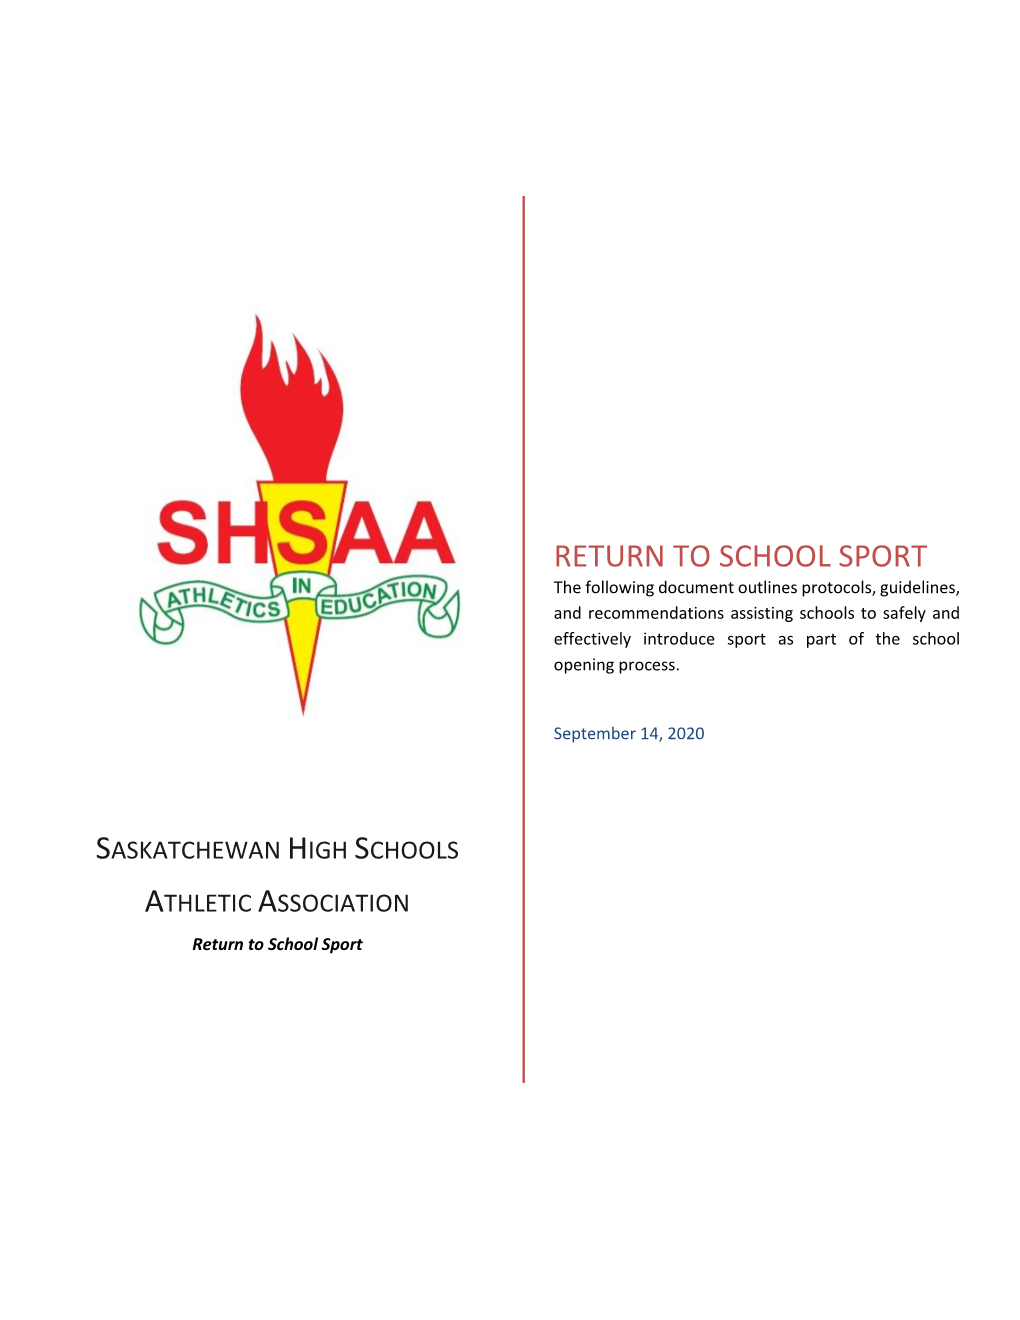 SASKATCHEWAN HIGH SCHOOLS ATHLETIC ASSOCIATION Return to School Sport